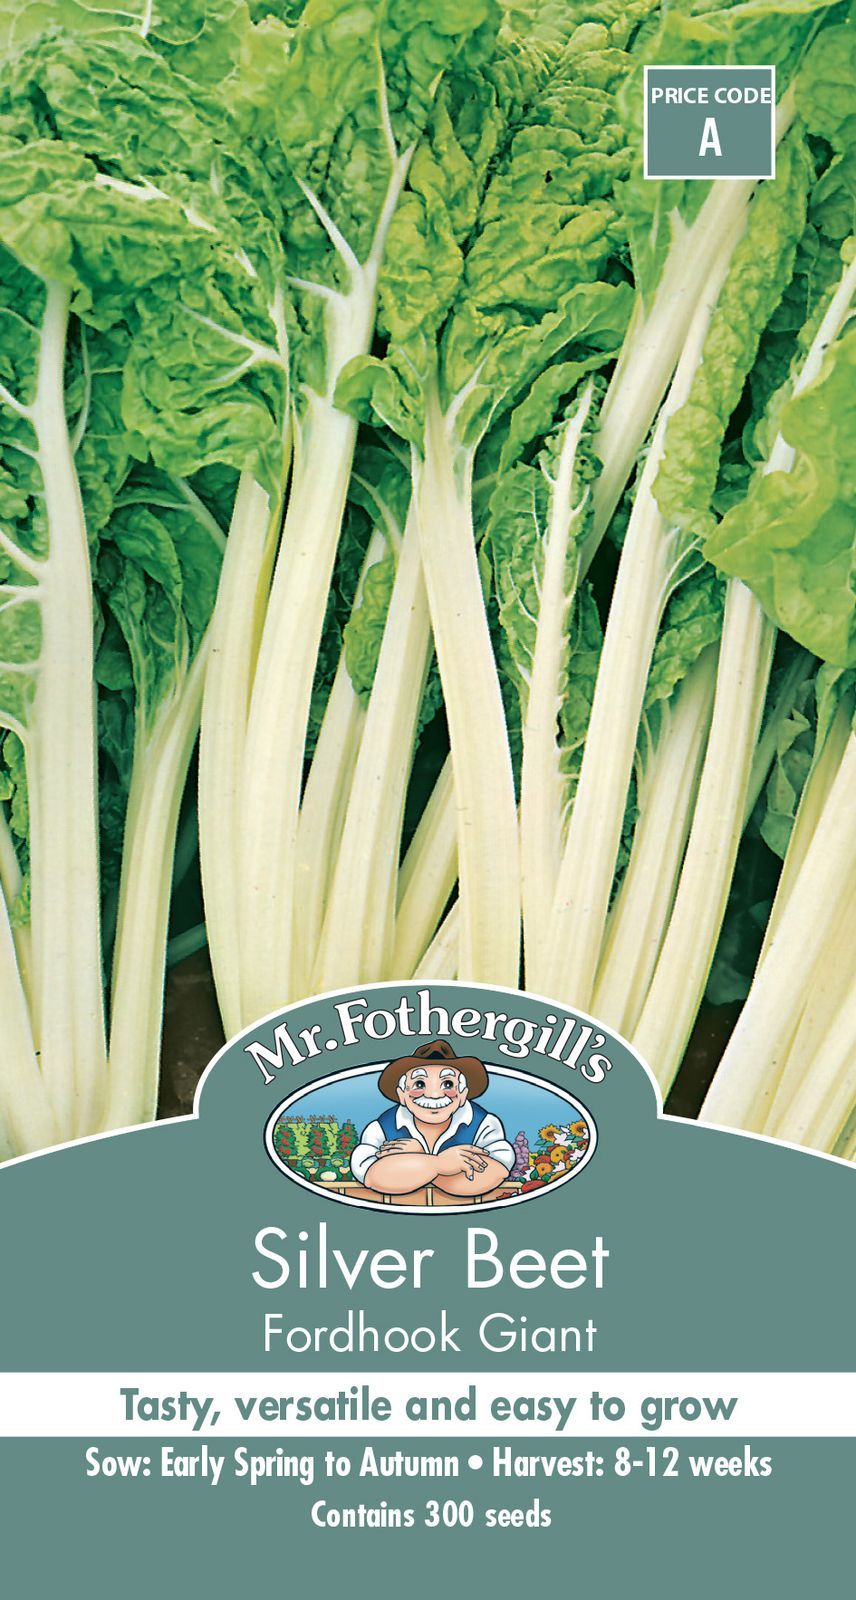 Mr Fothergills Silver Beet FordHook Giant - Woonona Petfood & Produce